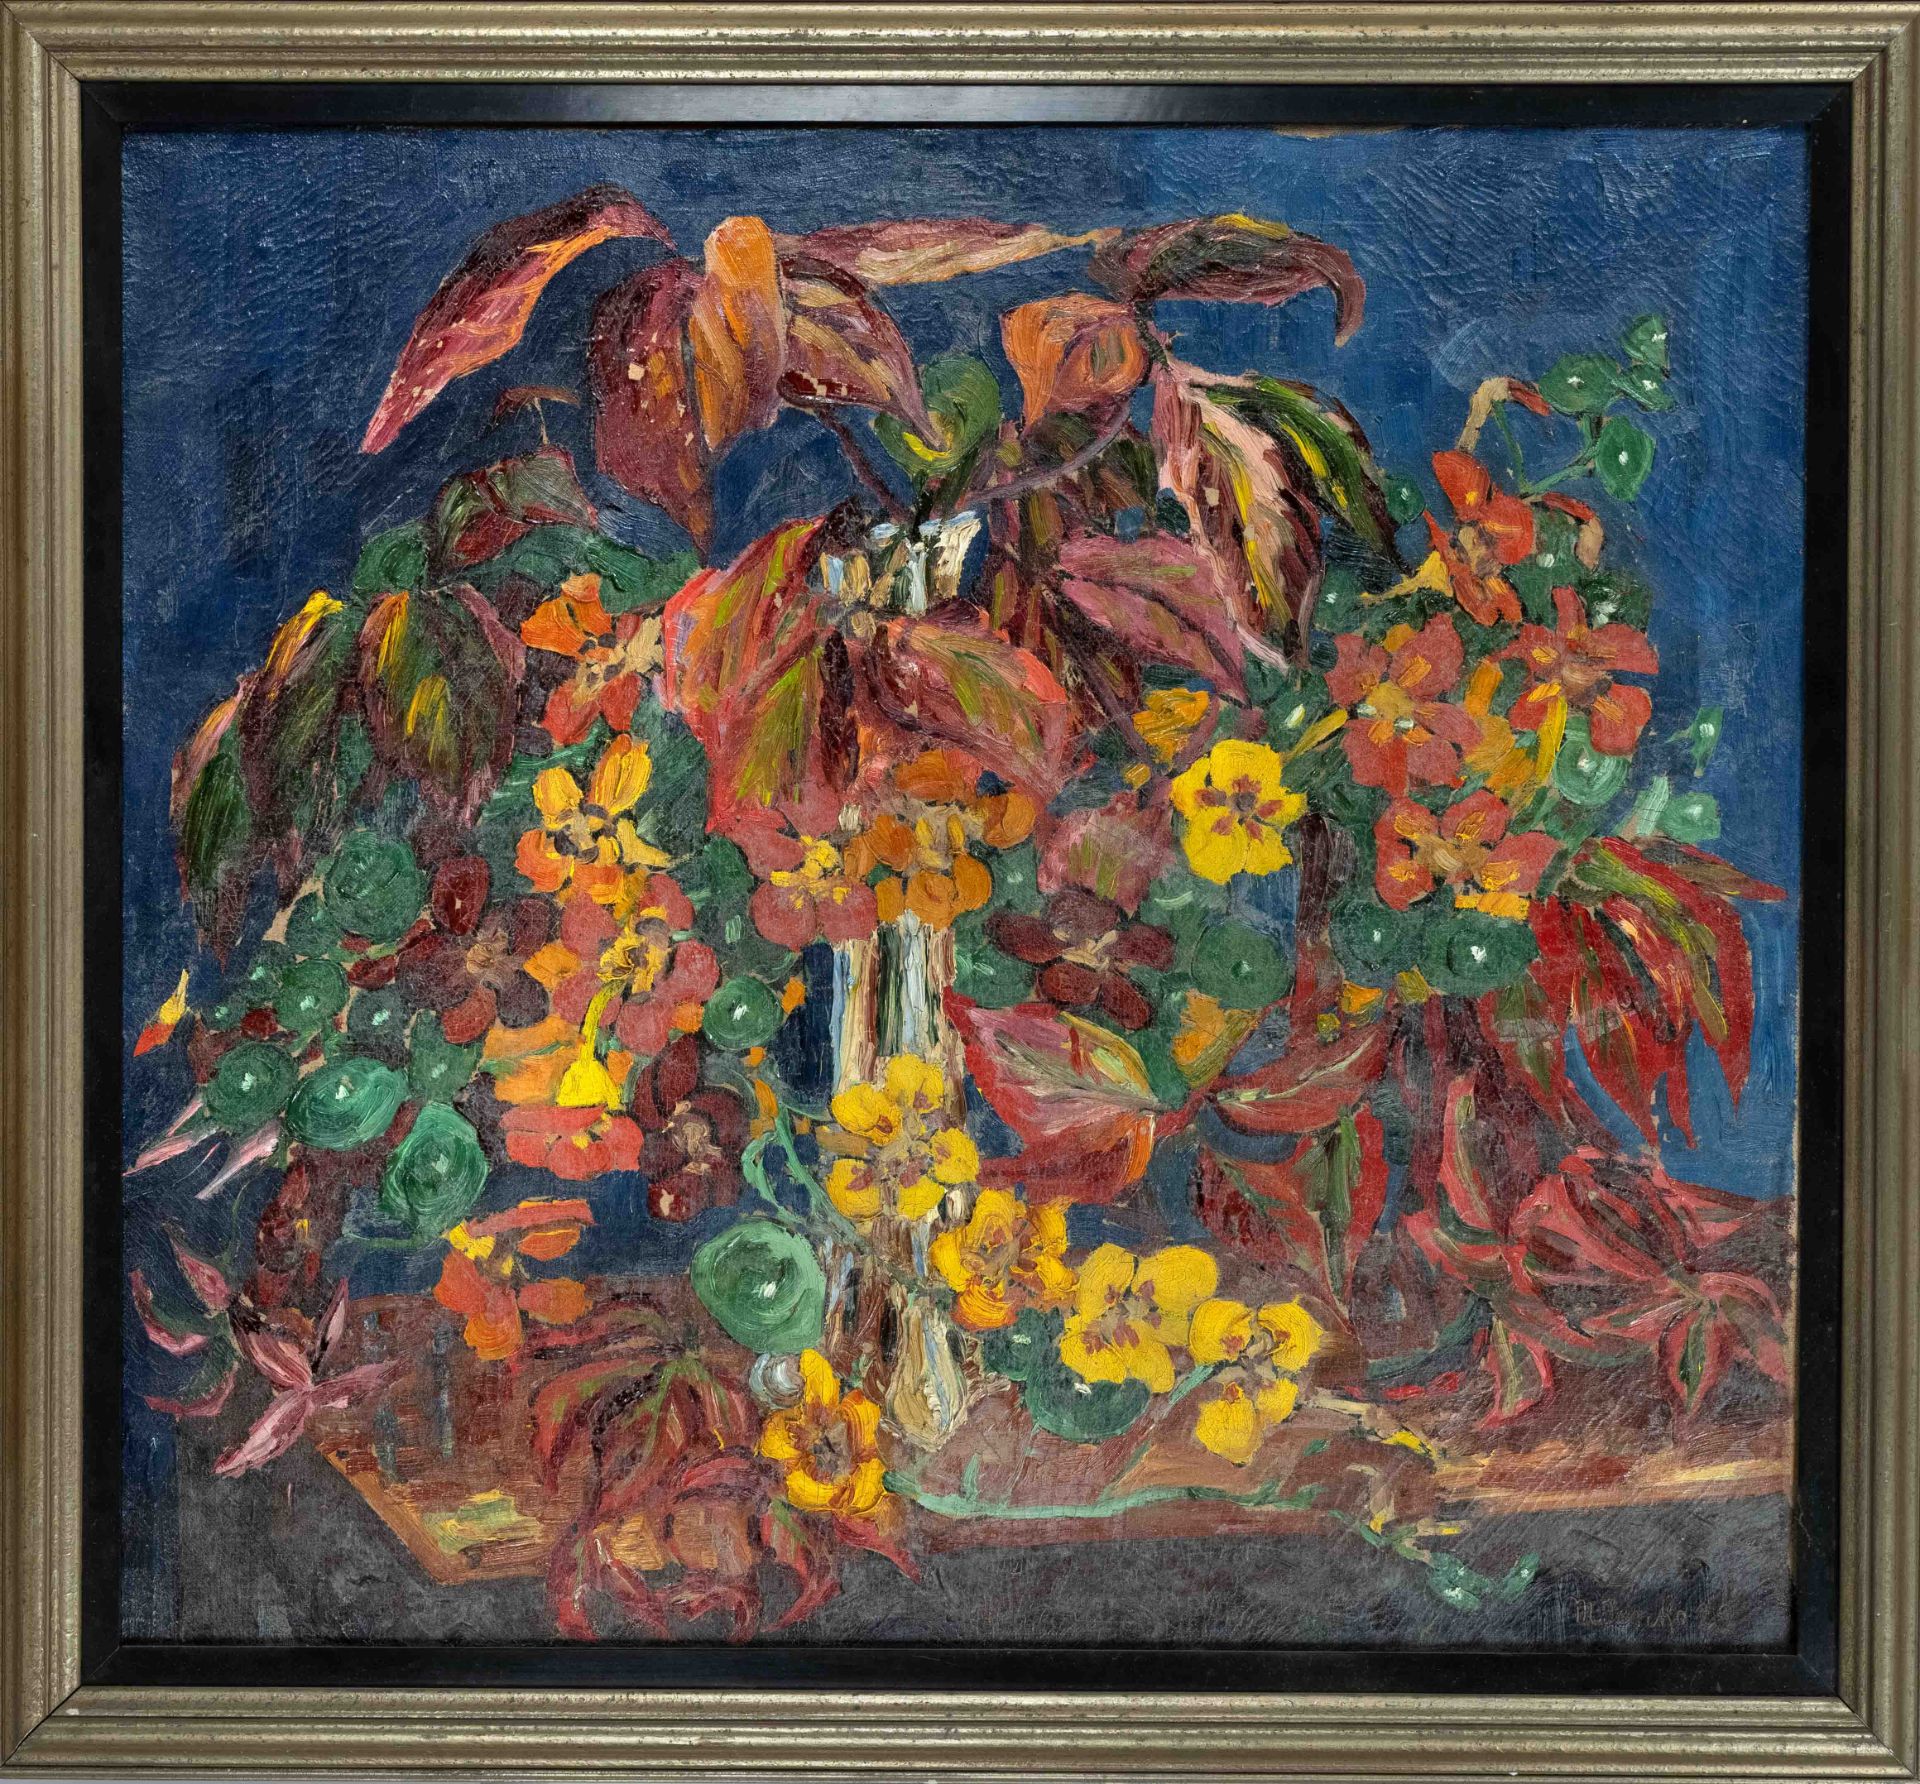 M. Jenko, painter 1st half of the 20th century, impressionistic flower still life with impasto